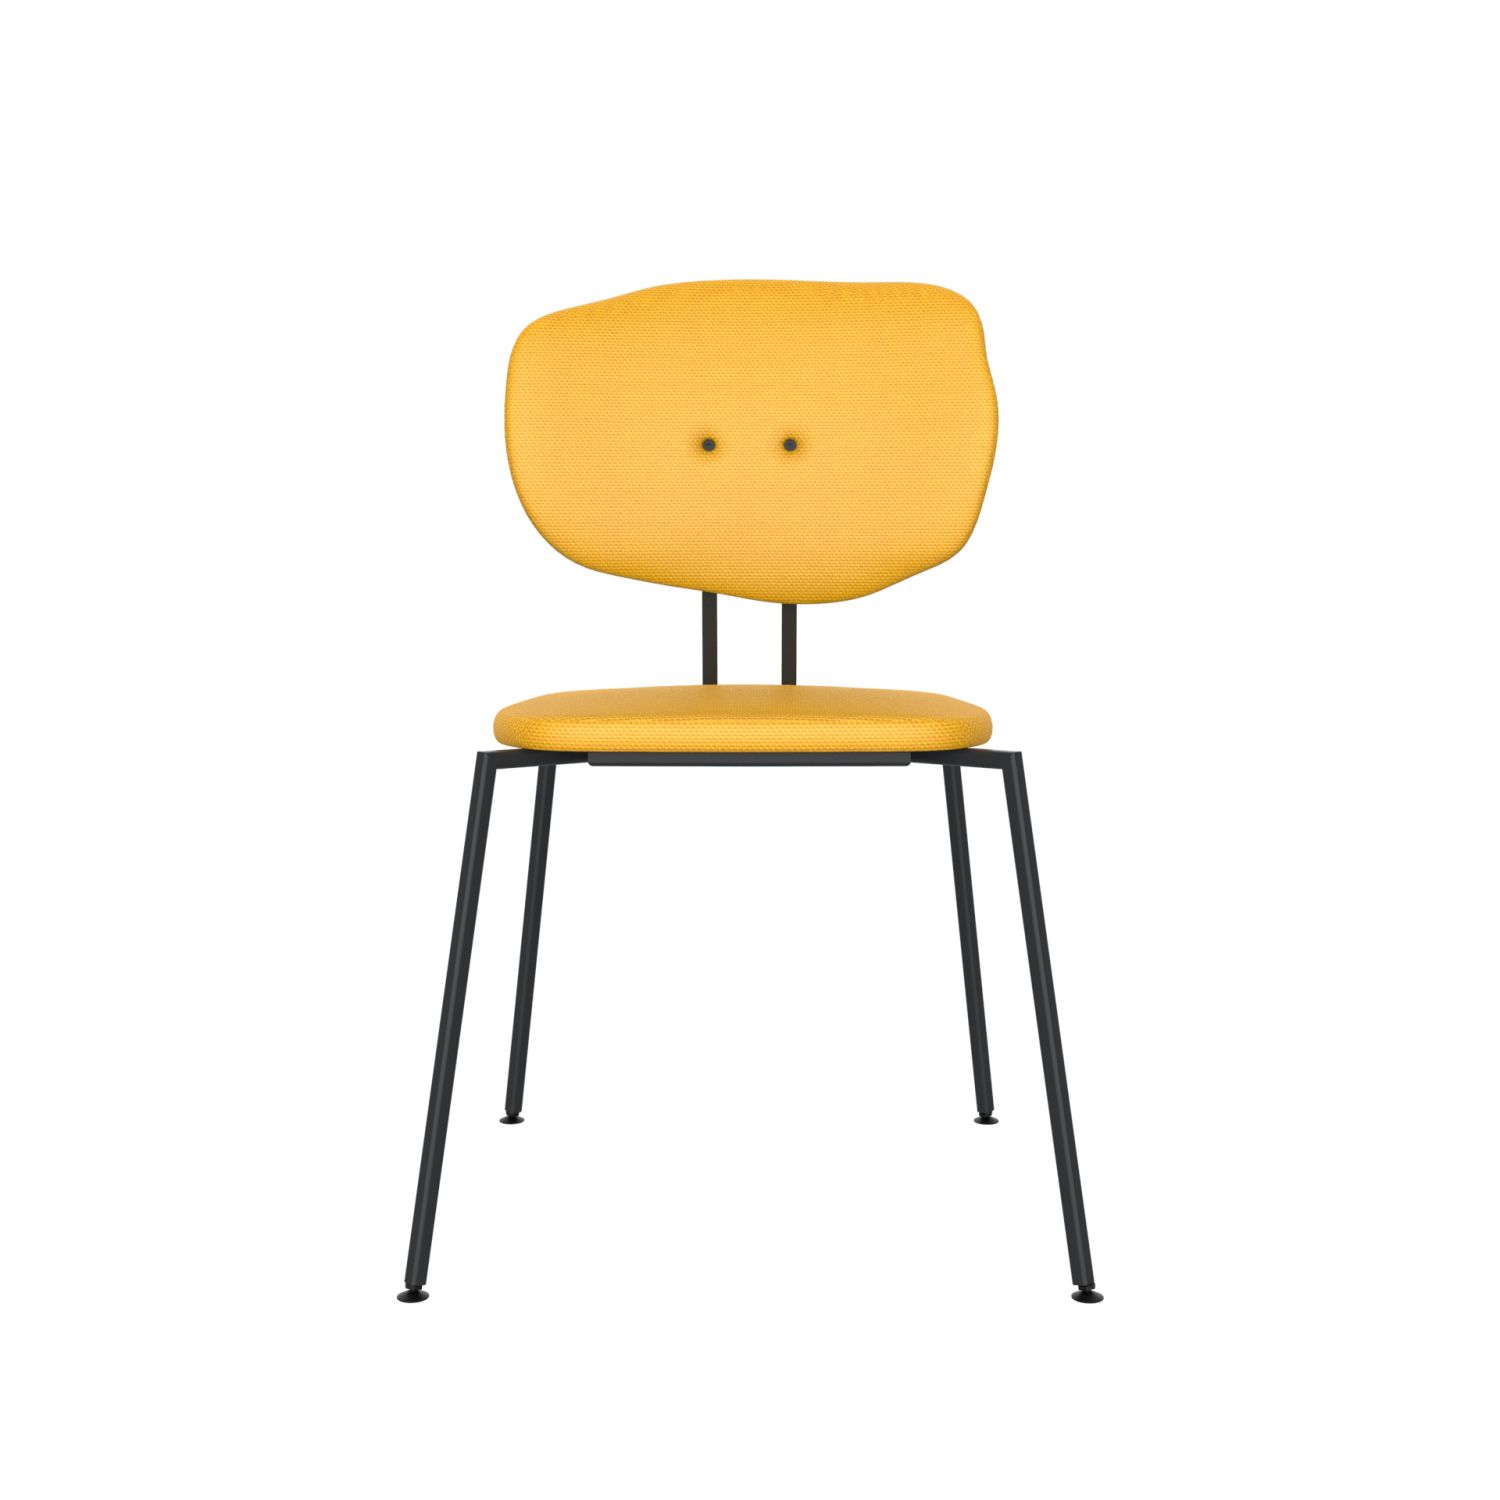 lensvelt maarten baas chair 141 stackable without armrests backrest f lemon yellow 051 black ral9005 hard leg ends